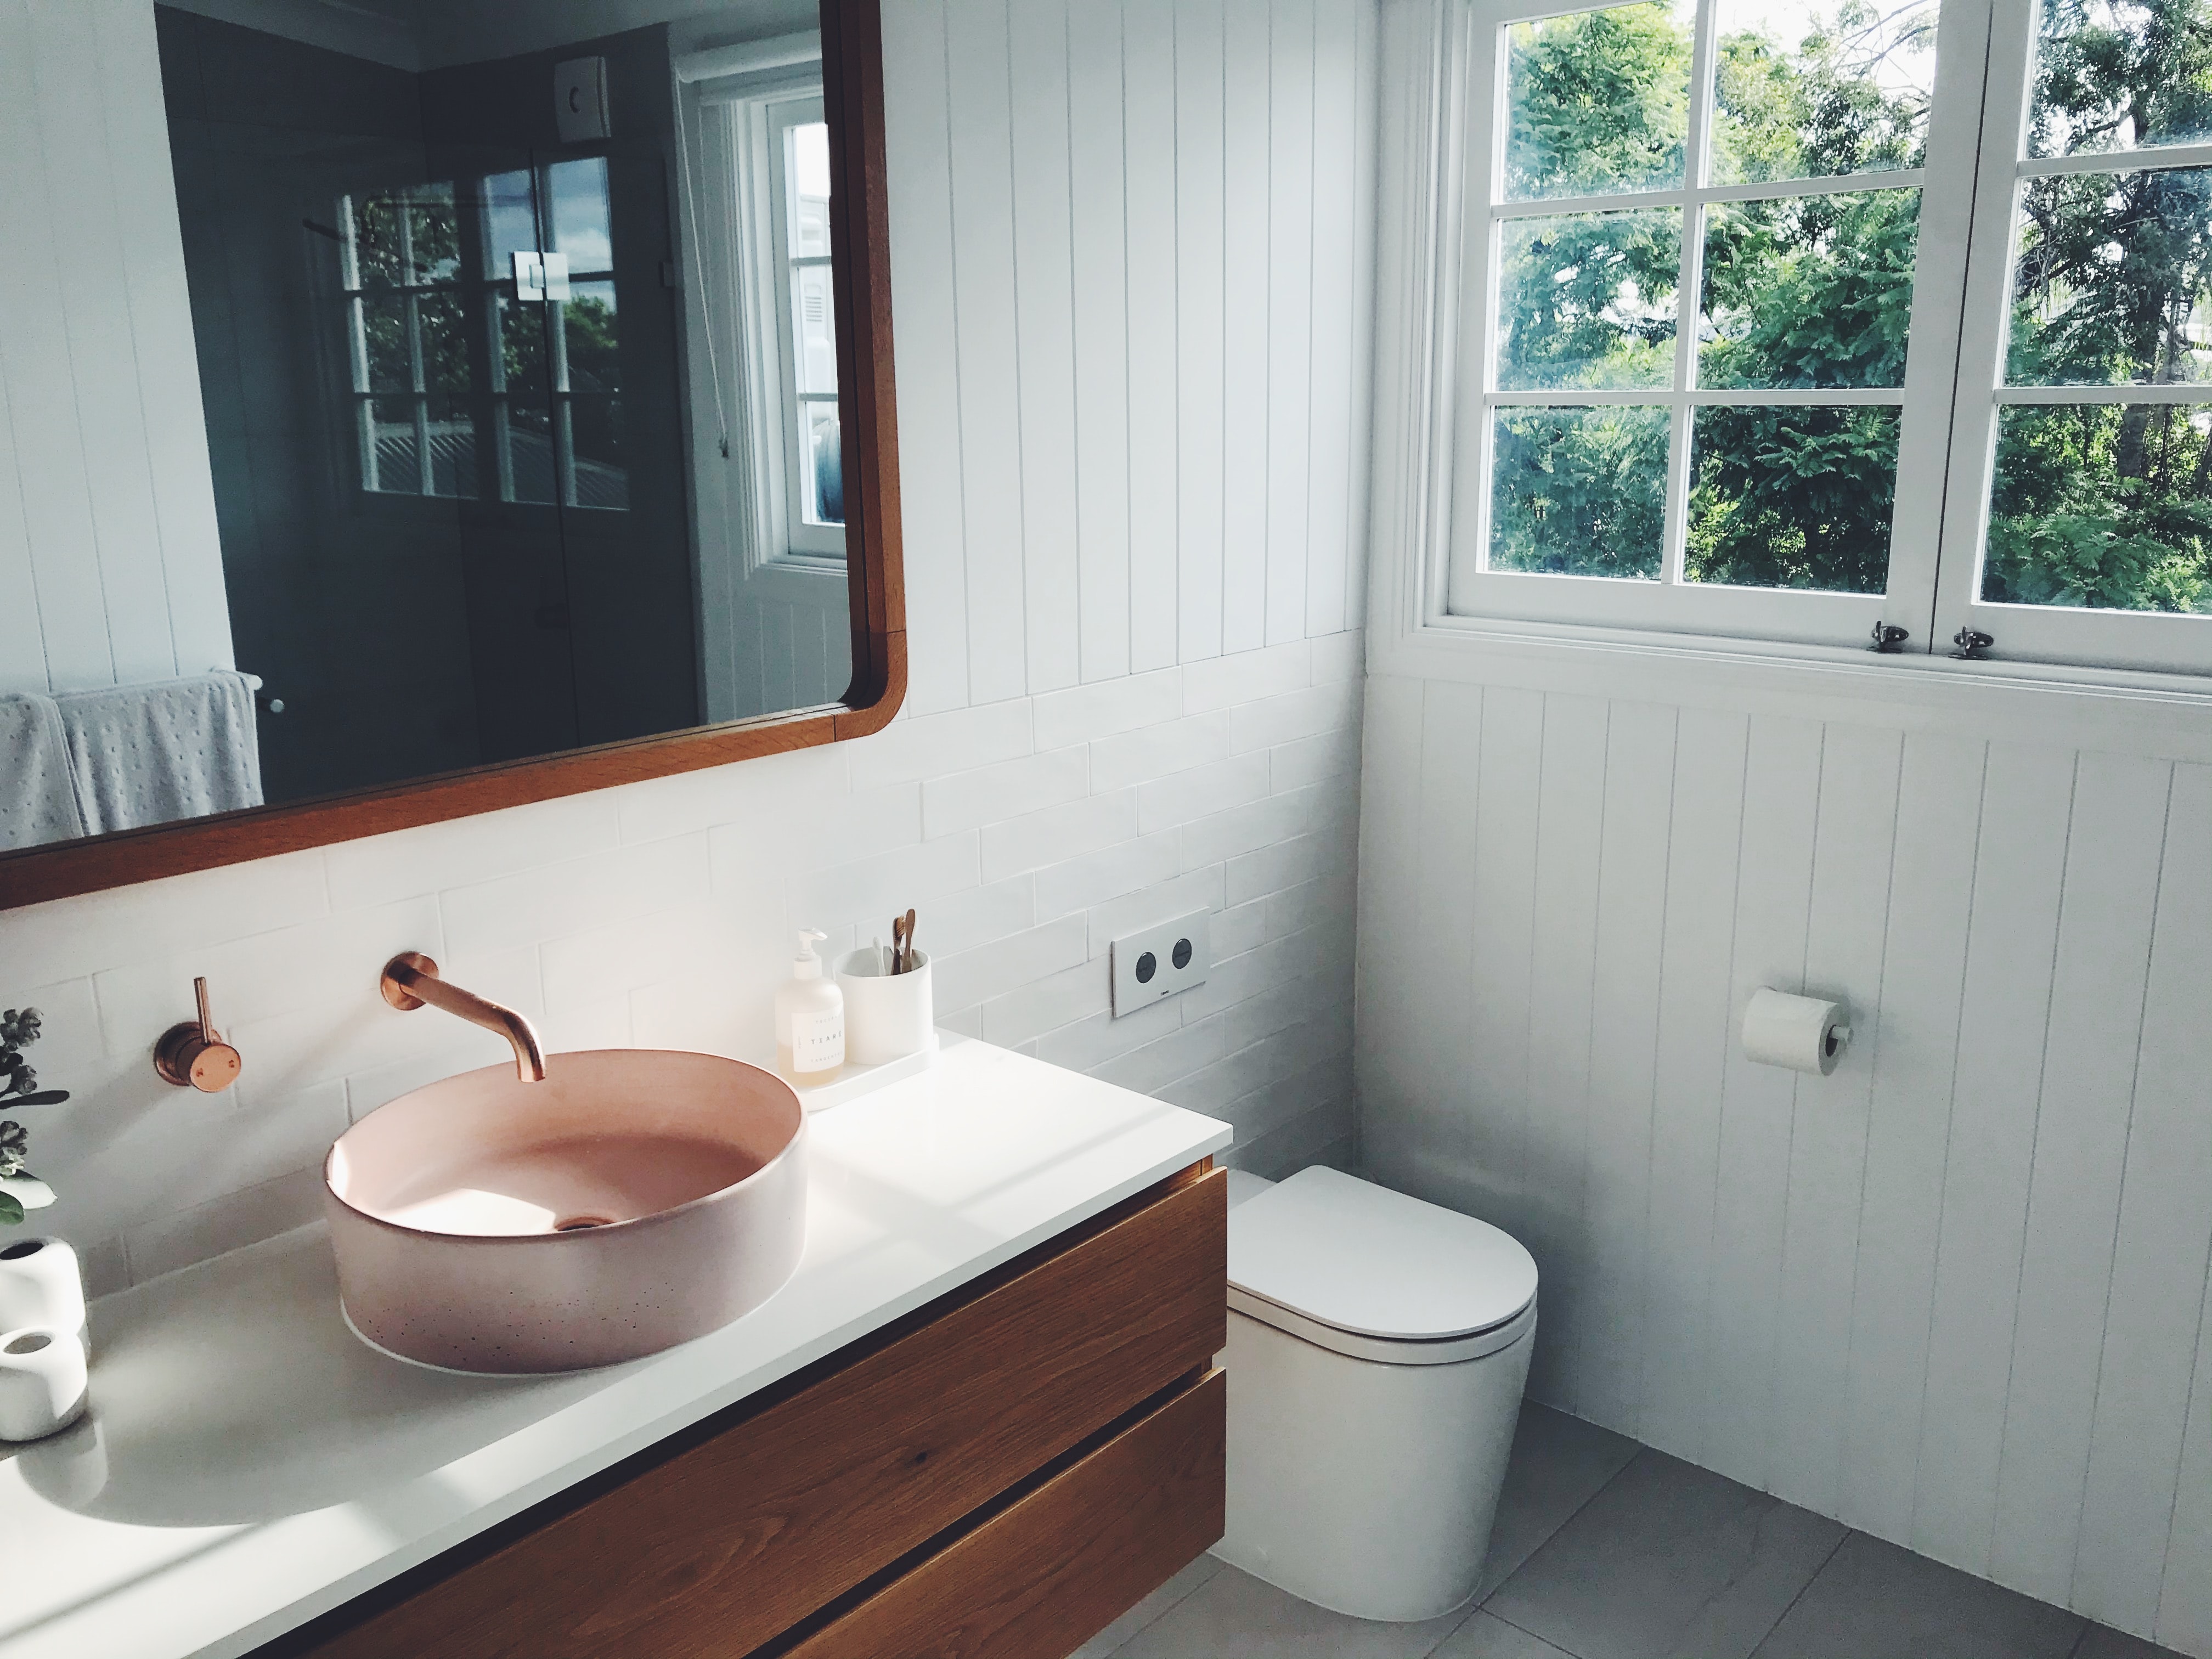 Renovated bathroom blush pink stone basin and oak finishes